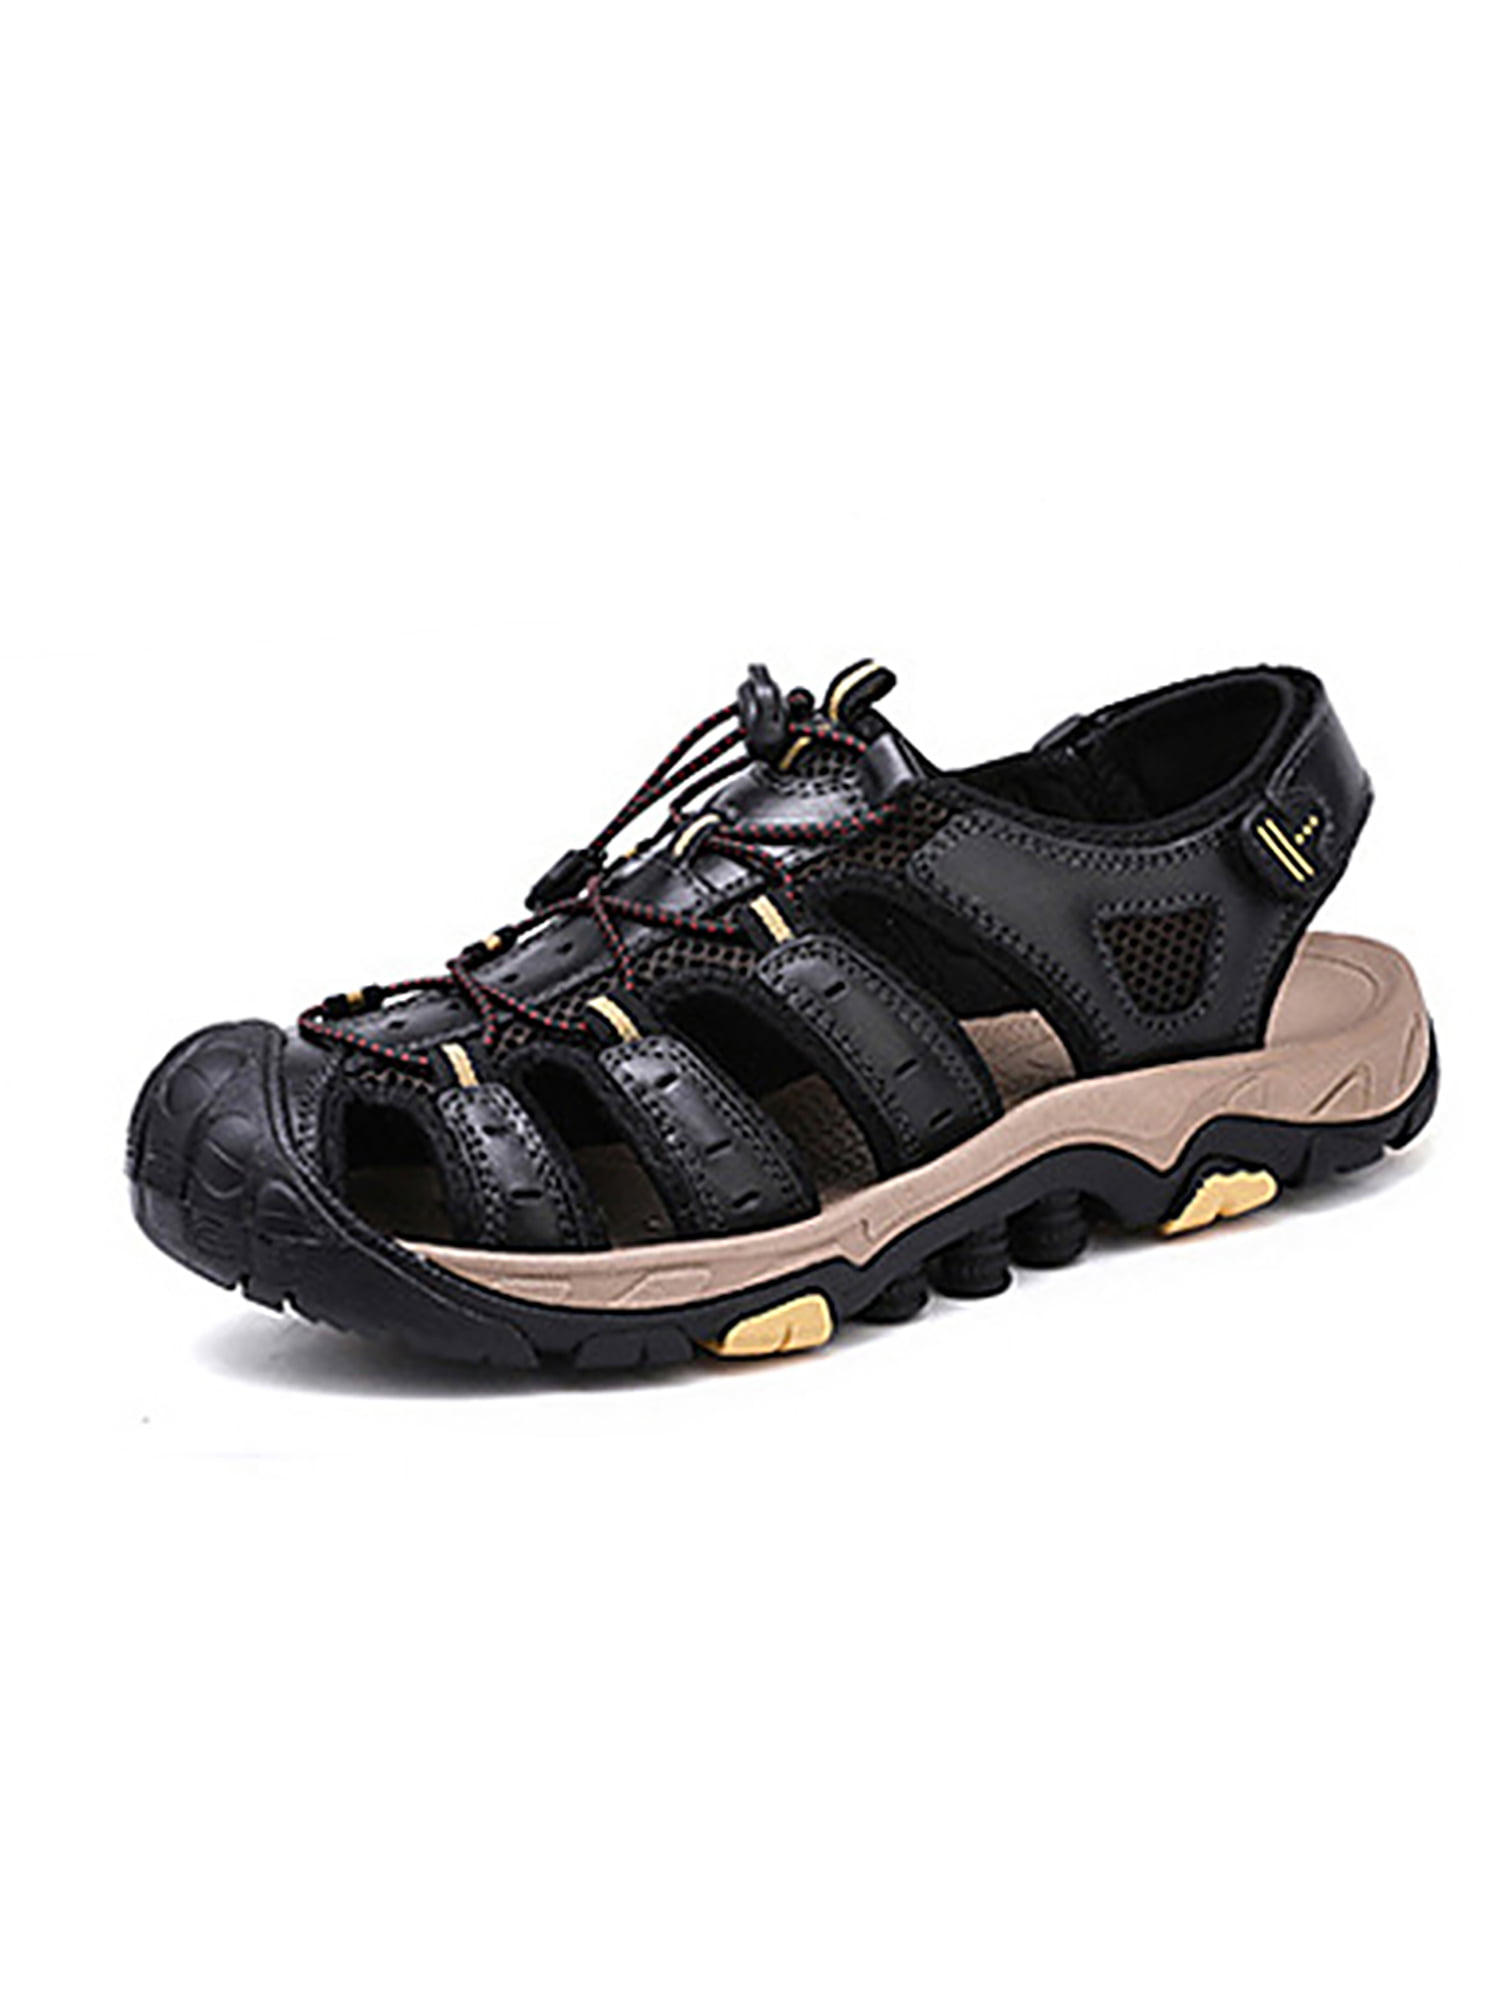 Mens Summer Sandals New Walking Hiking Trekking Sports Sandals Beach Shoes Size 